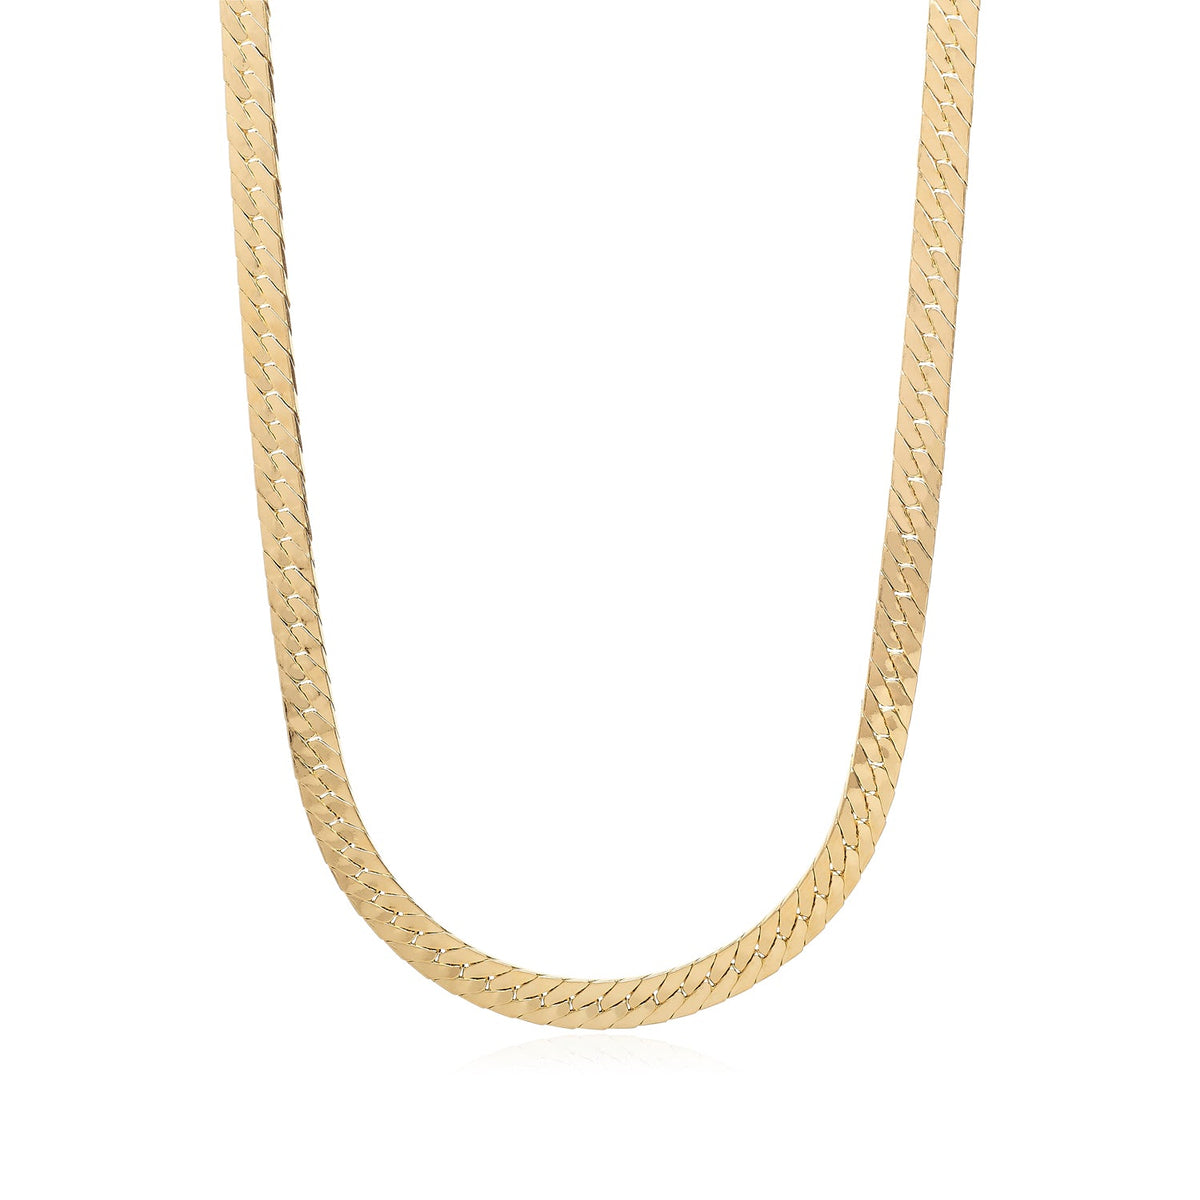 Olaeda Fancy Herringbone Chain Necklace - 20"